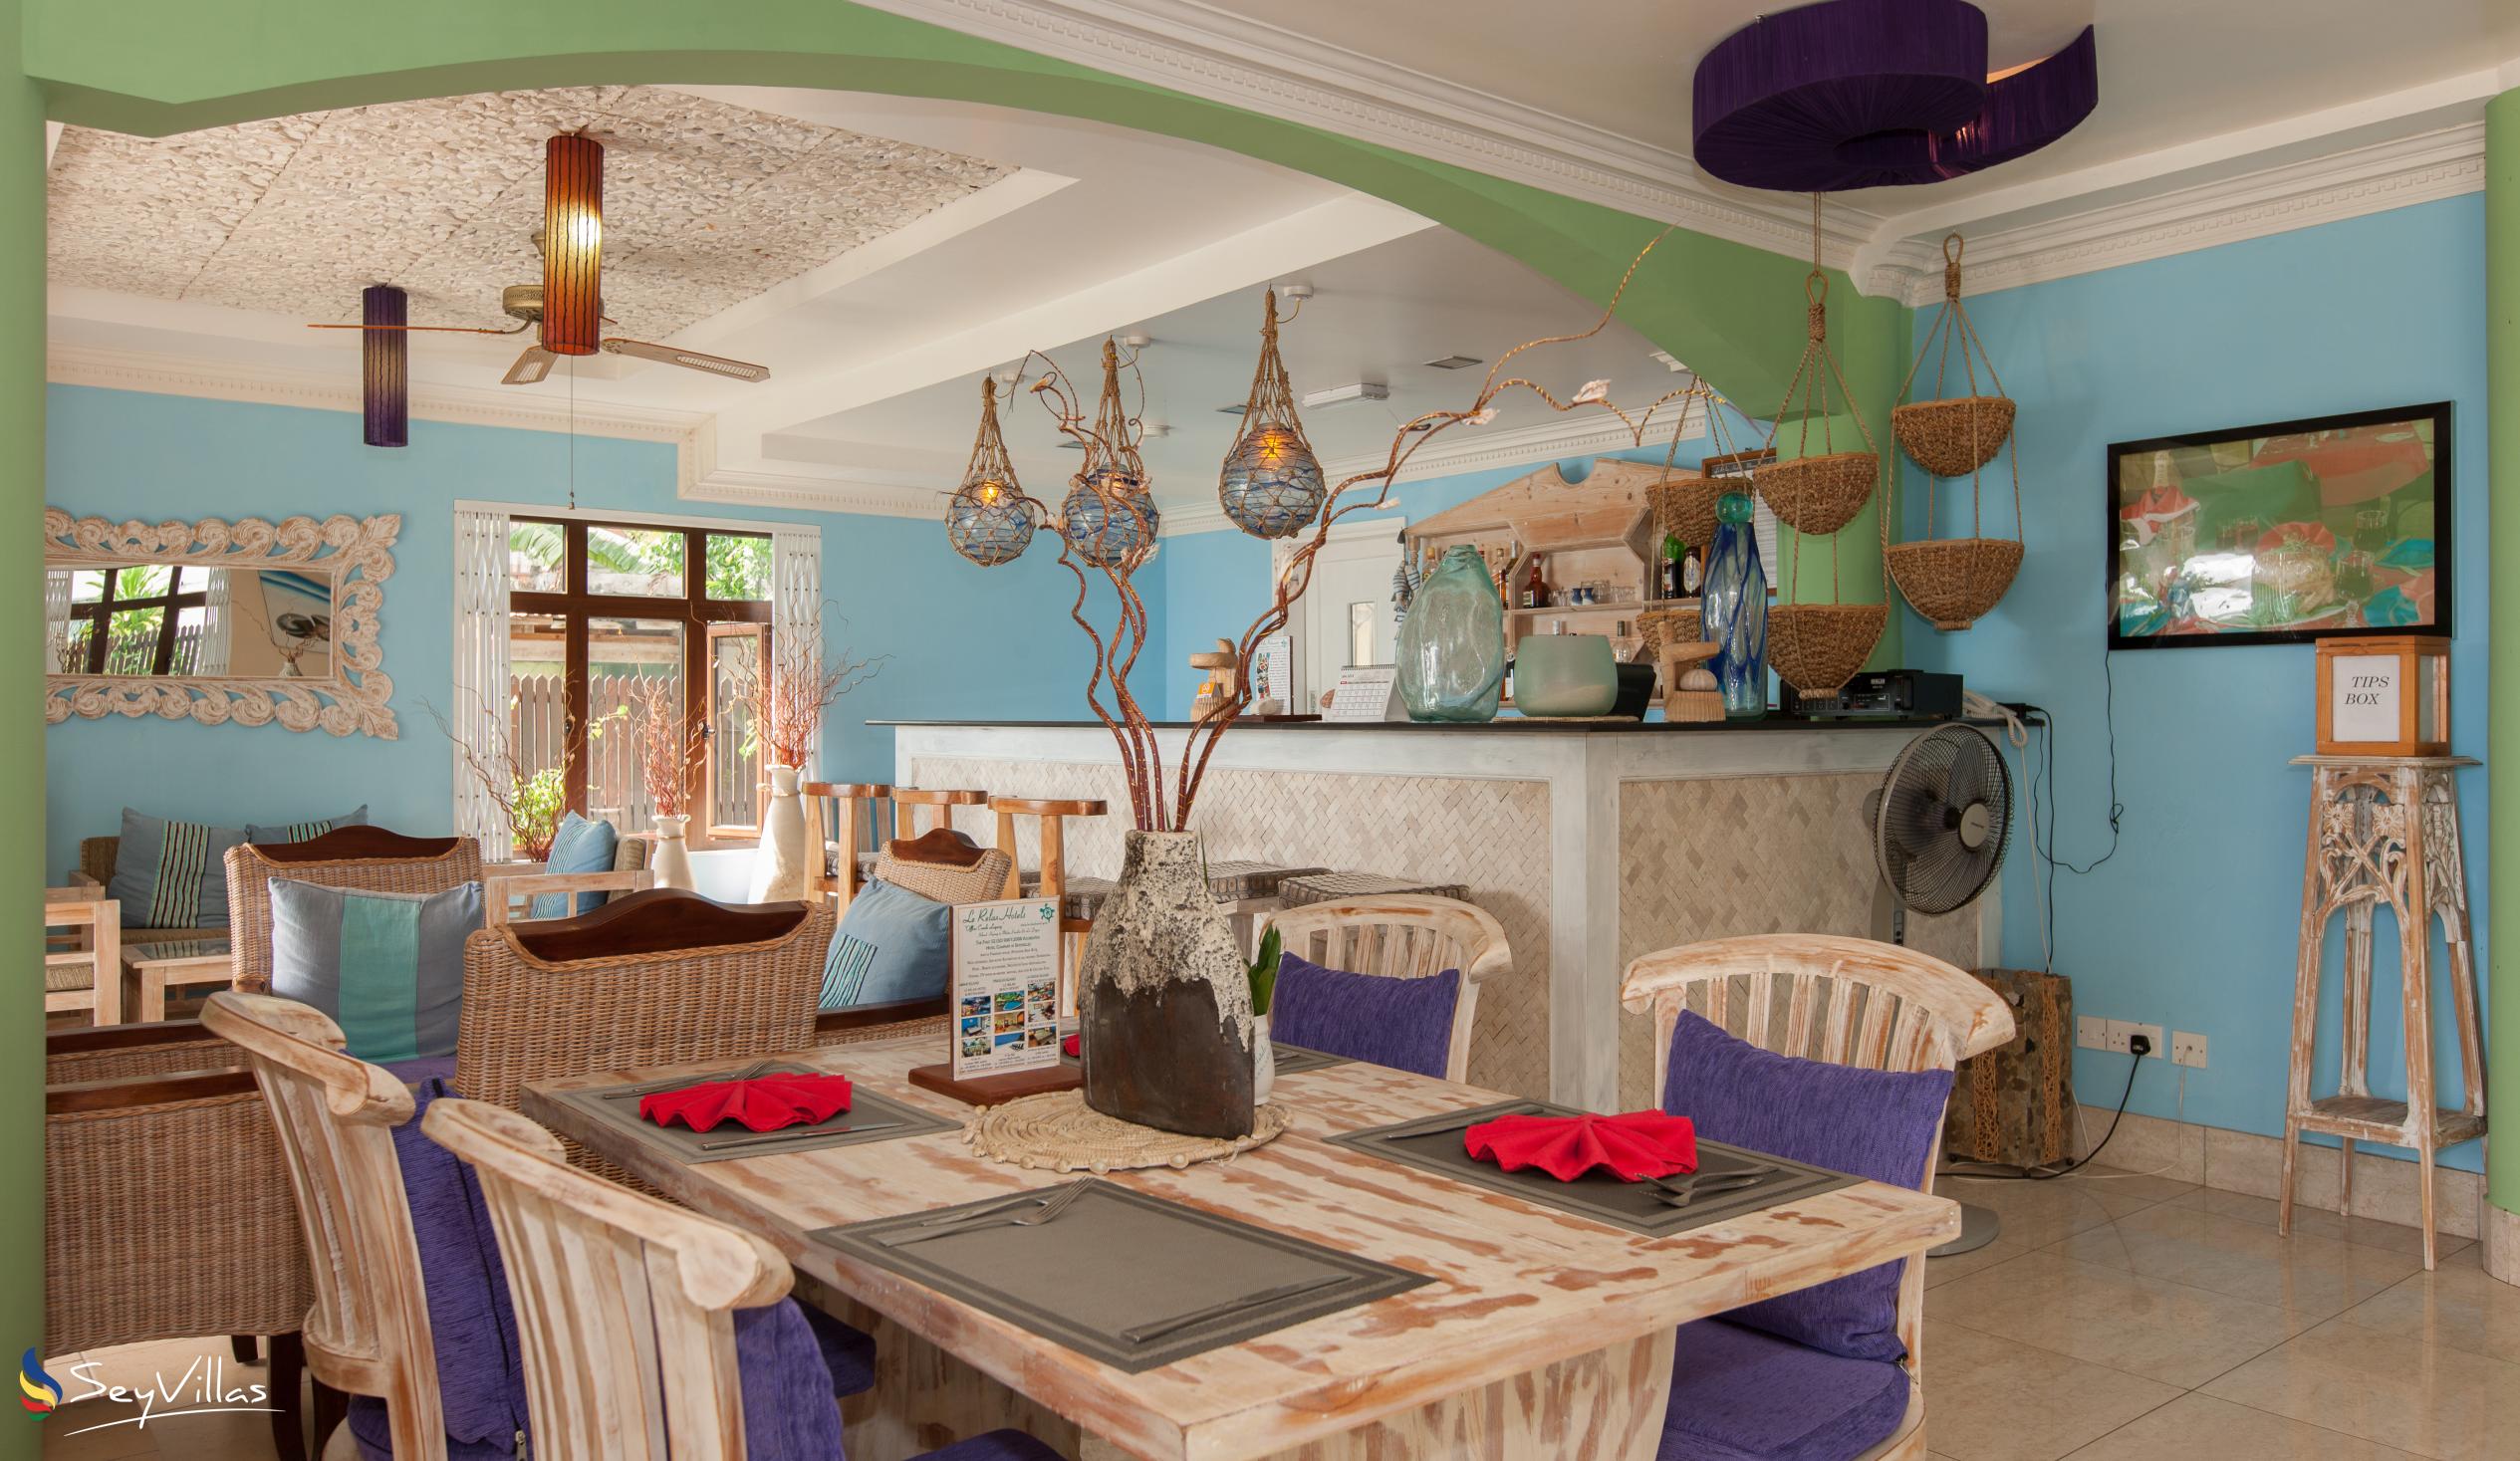 Photo 9: Le Relax Beach House - Indoor area - La Digue (Seychelles)